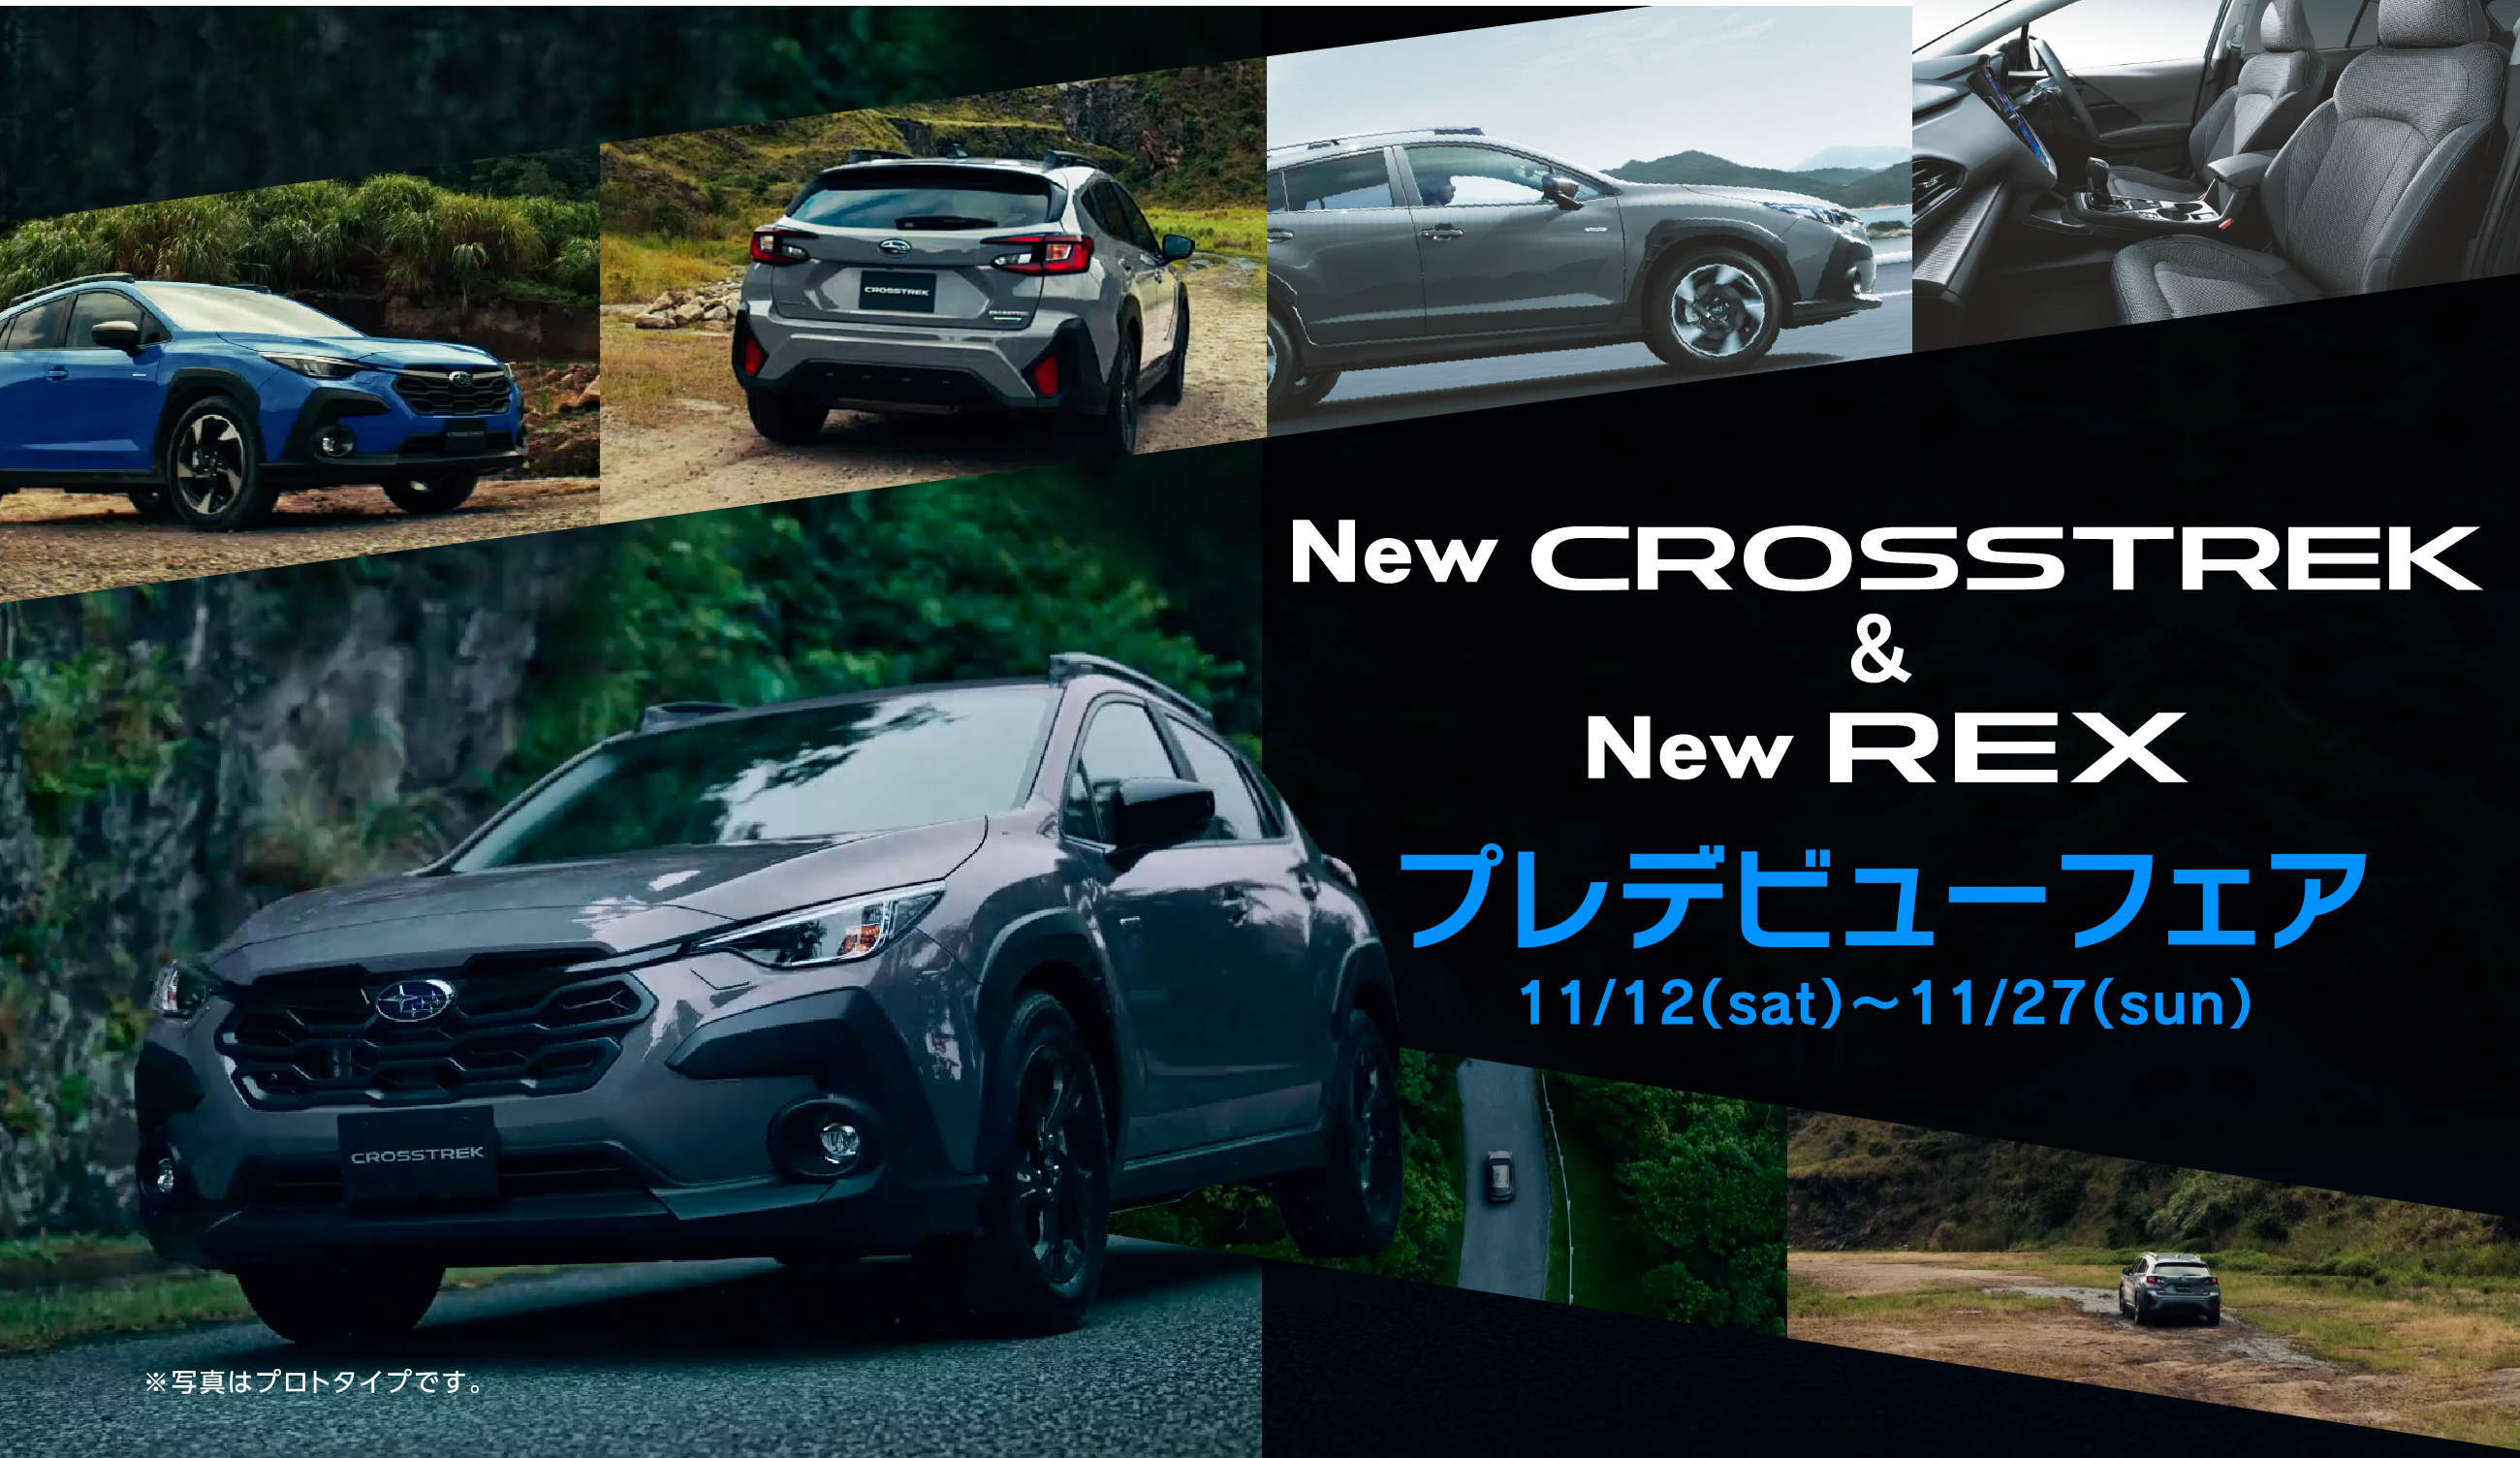 New CROSASTREK & 新小型SUV プレデビューフェア 11/12sat〜11/27sun